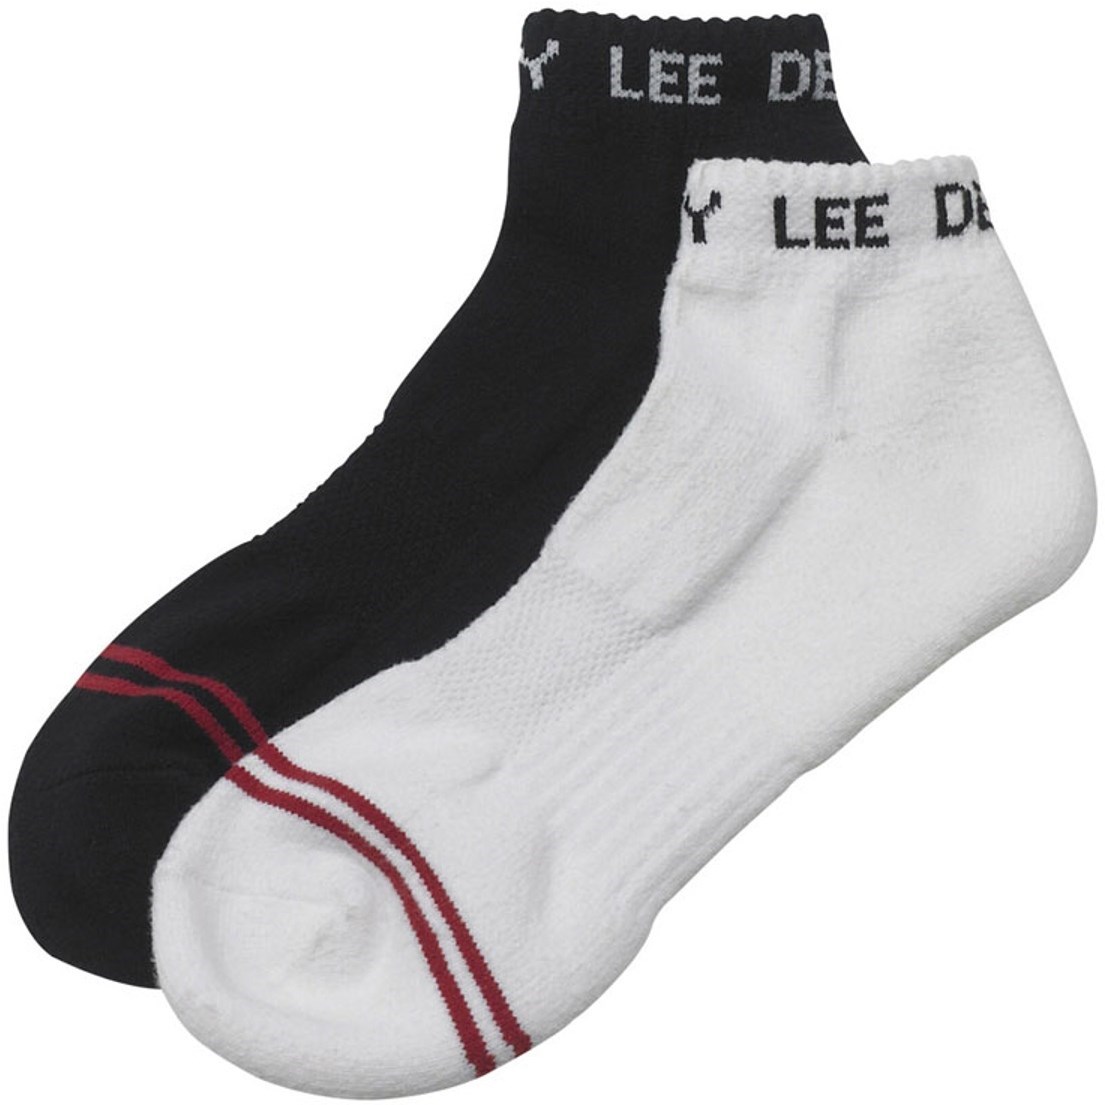 Troy Lee Low Cut 3 Pack Socks product image